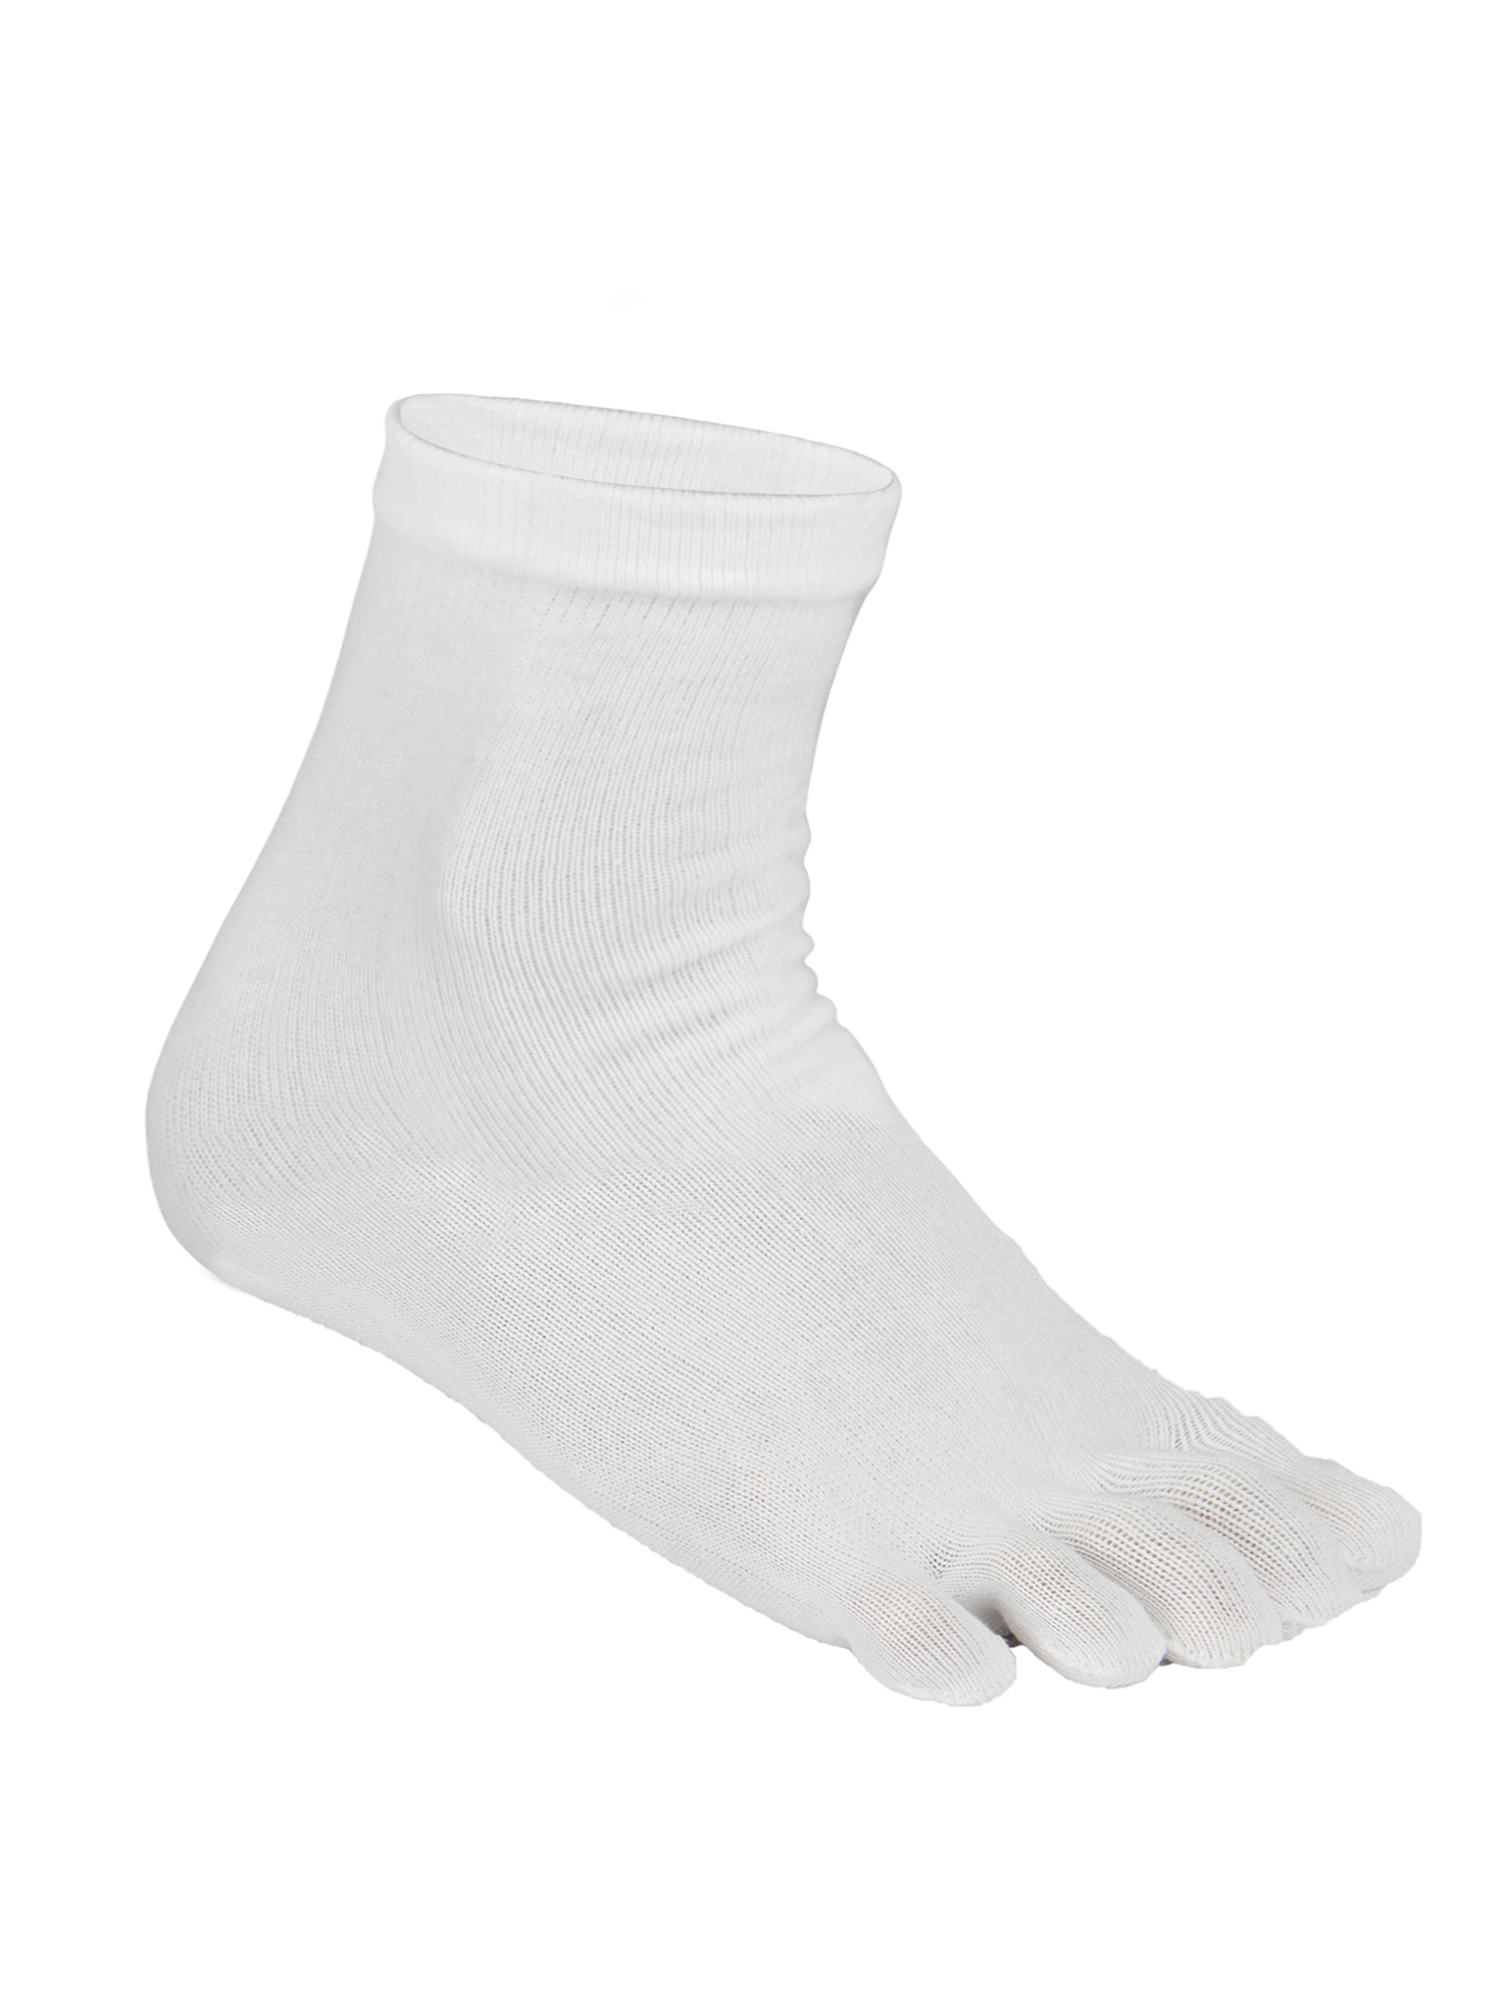 Men's Toe Socks 5 Finger Toe Flip Flop Socks Cotton 3 Pairs Casual Tabi Style Stylish Fun Premium Cotton Socks (3 Pack) - image 3 of 6